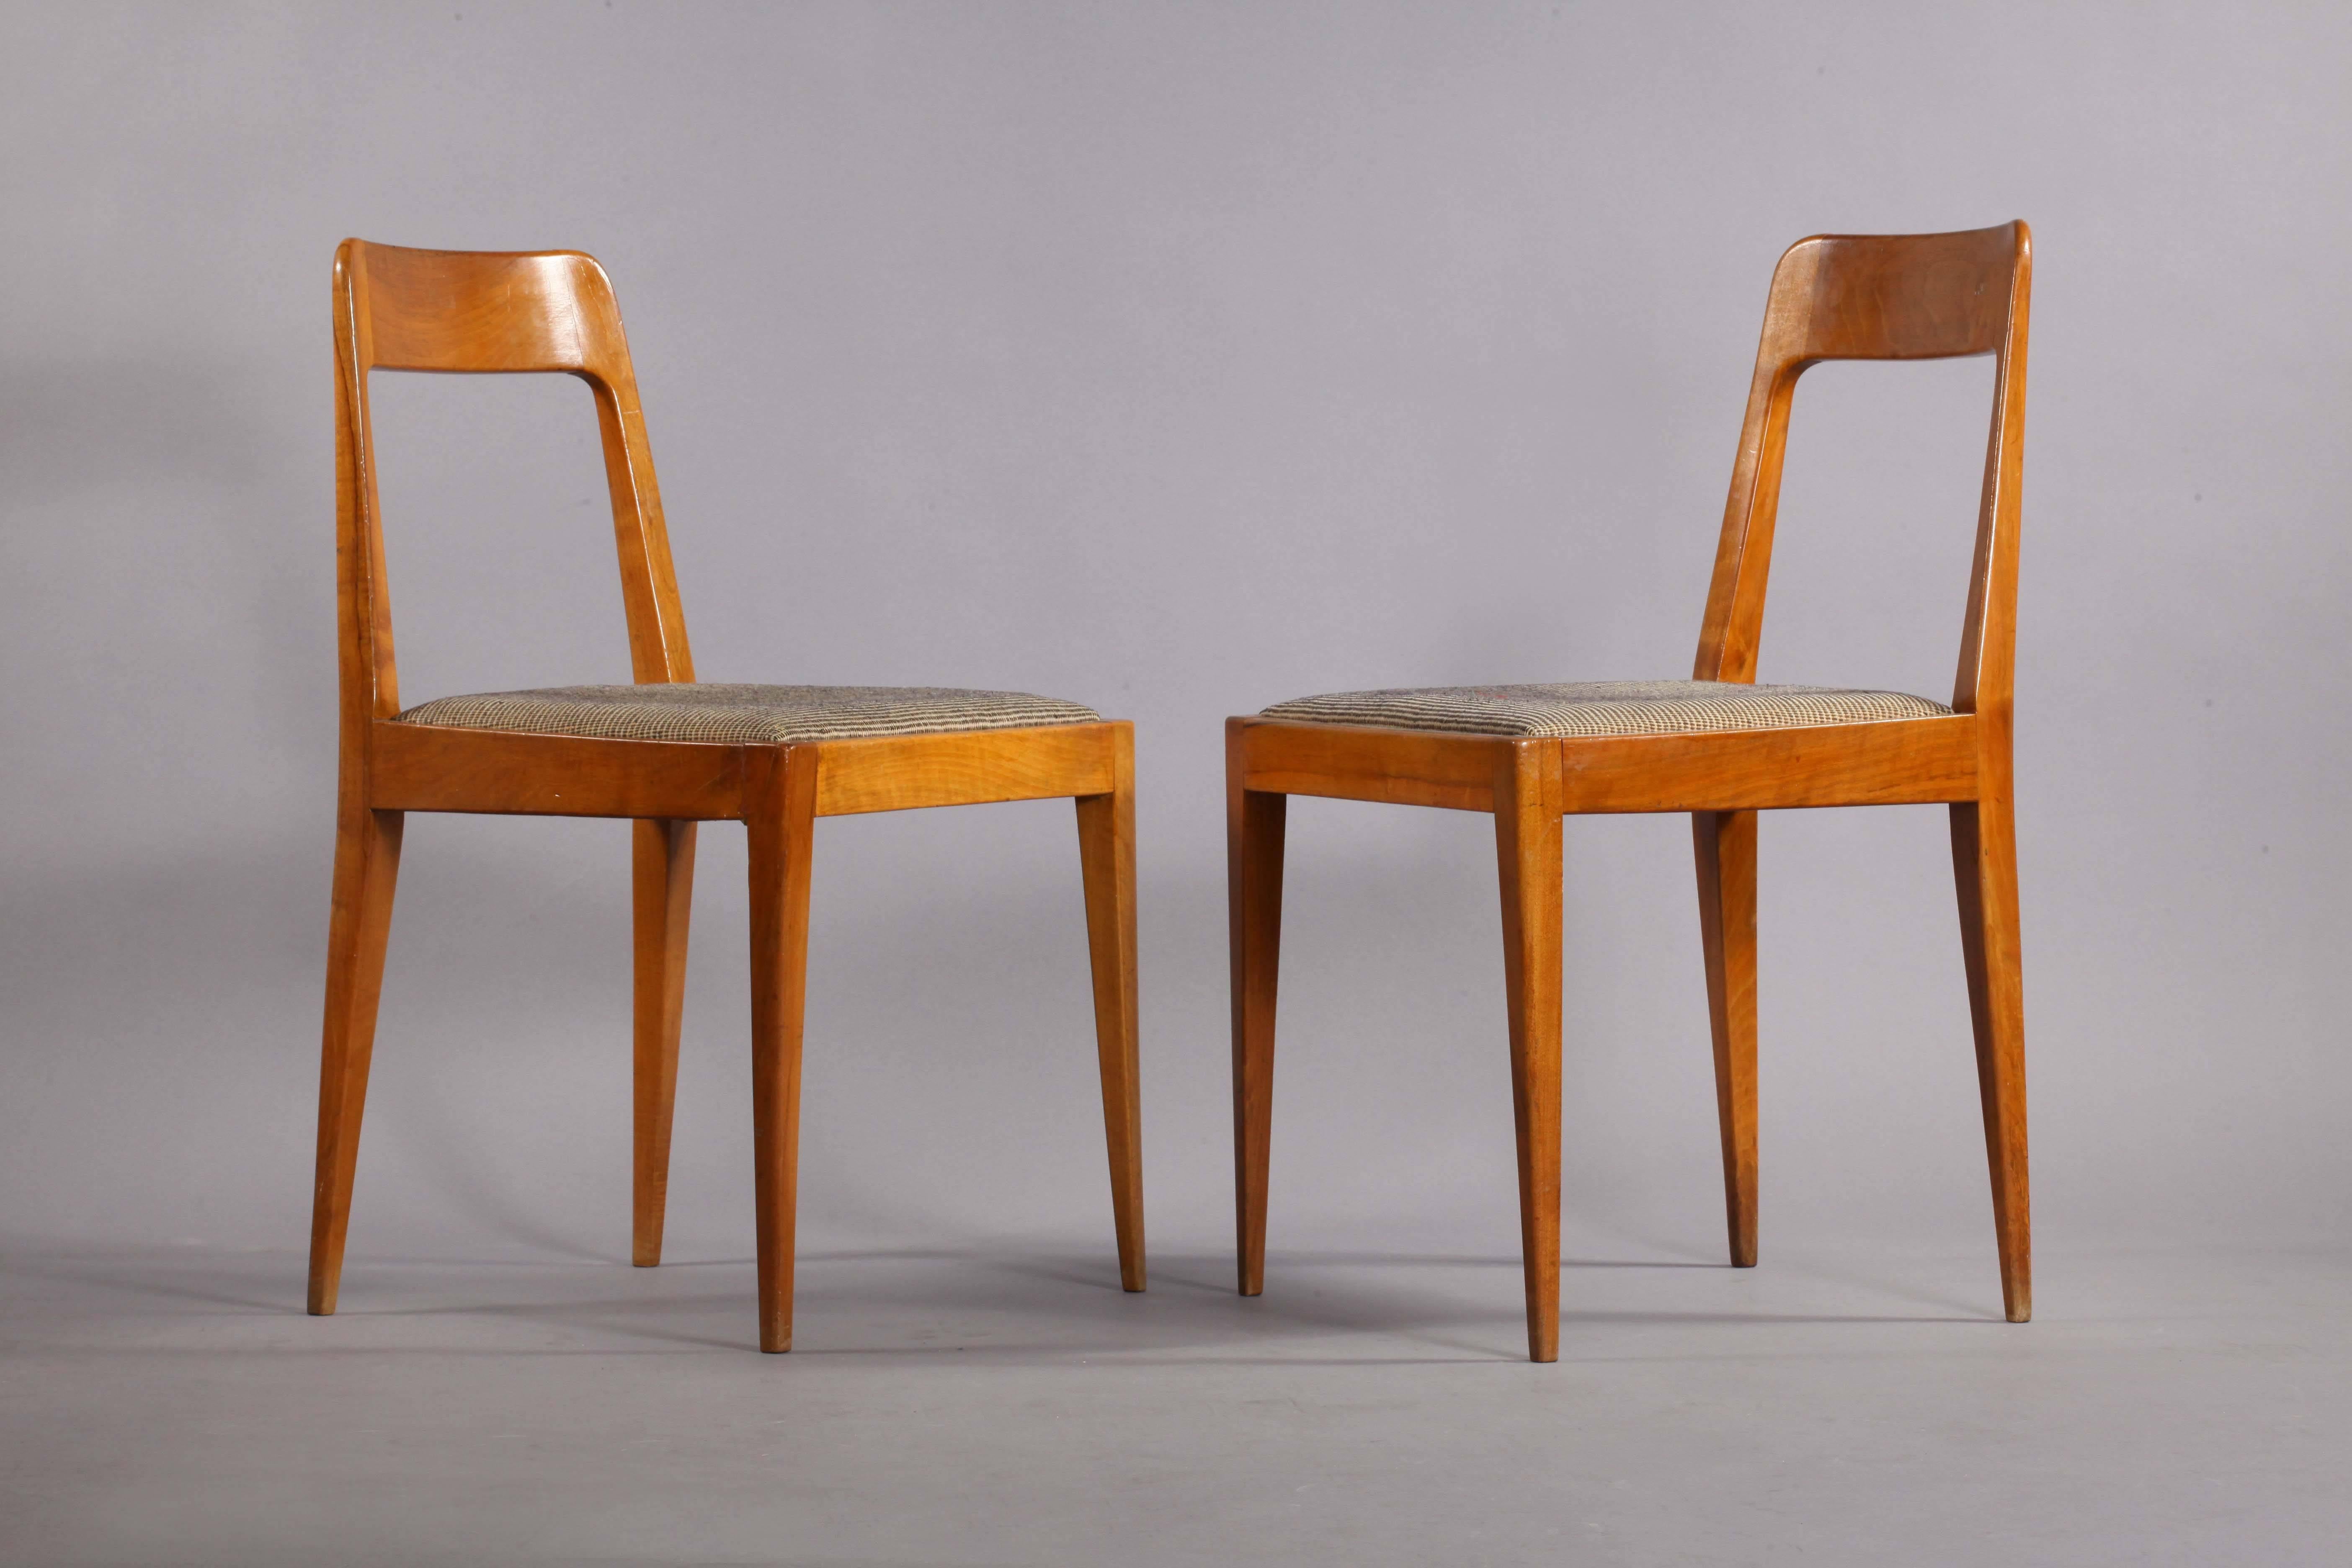 Two chairs
Carl Auböck,
manufacted by Österreichische Werkstätten,
Vienna 1950.
original Fabric,
model Nr. A7,
sticker on the bottom of the seat.